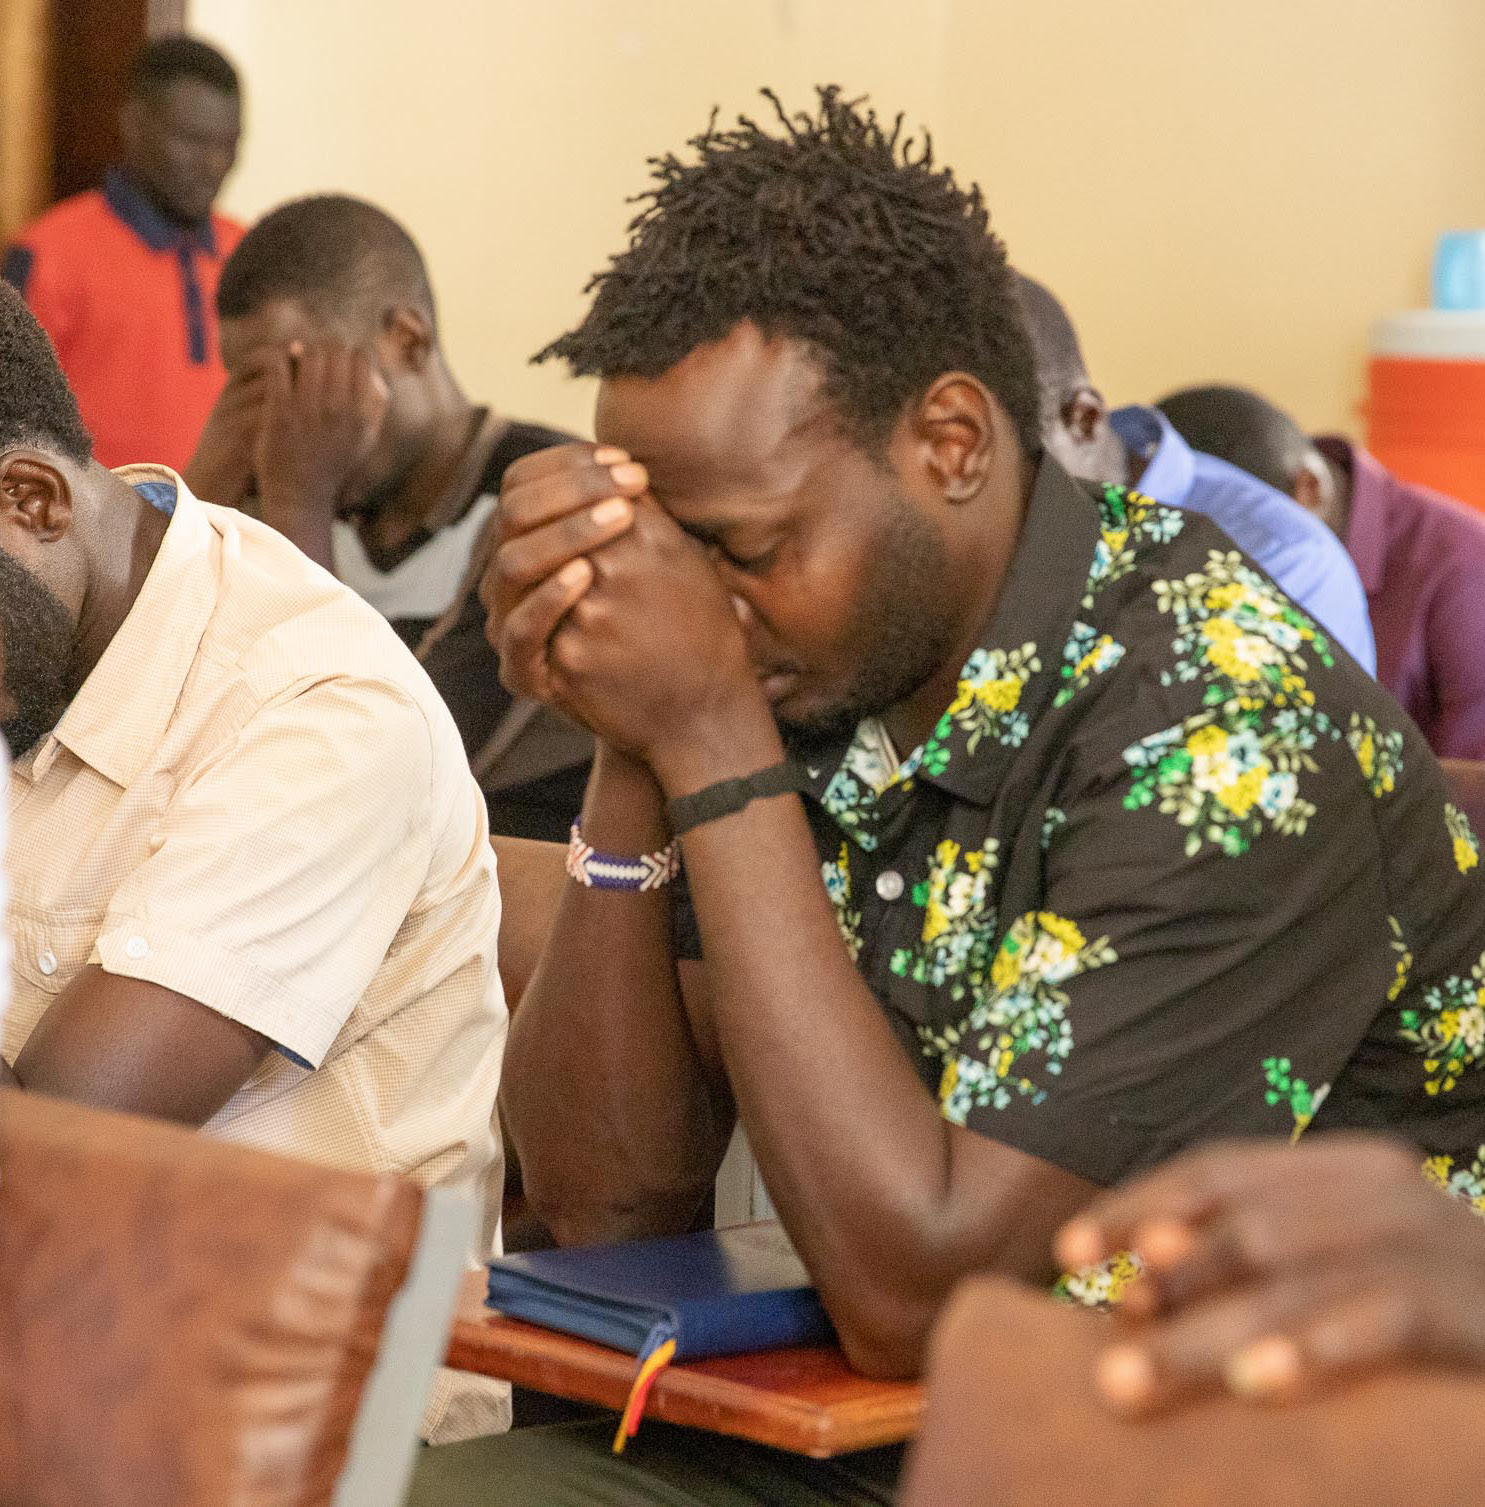 unfoldingWord Celebrates 20 New Believers in Unreached People Group in Sudan